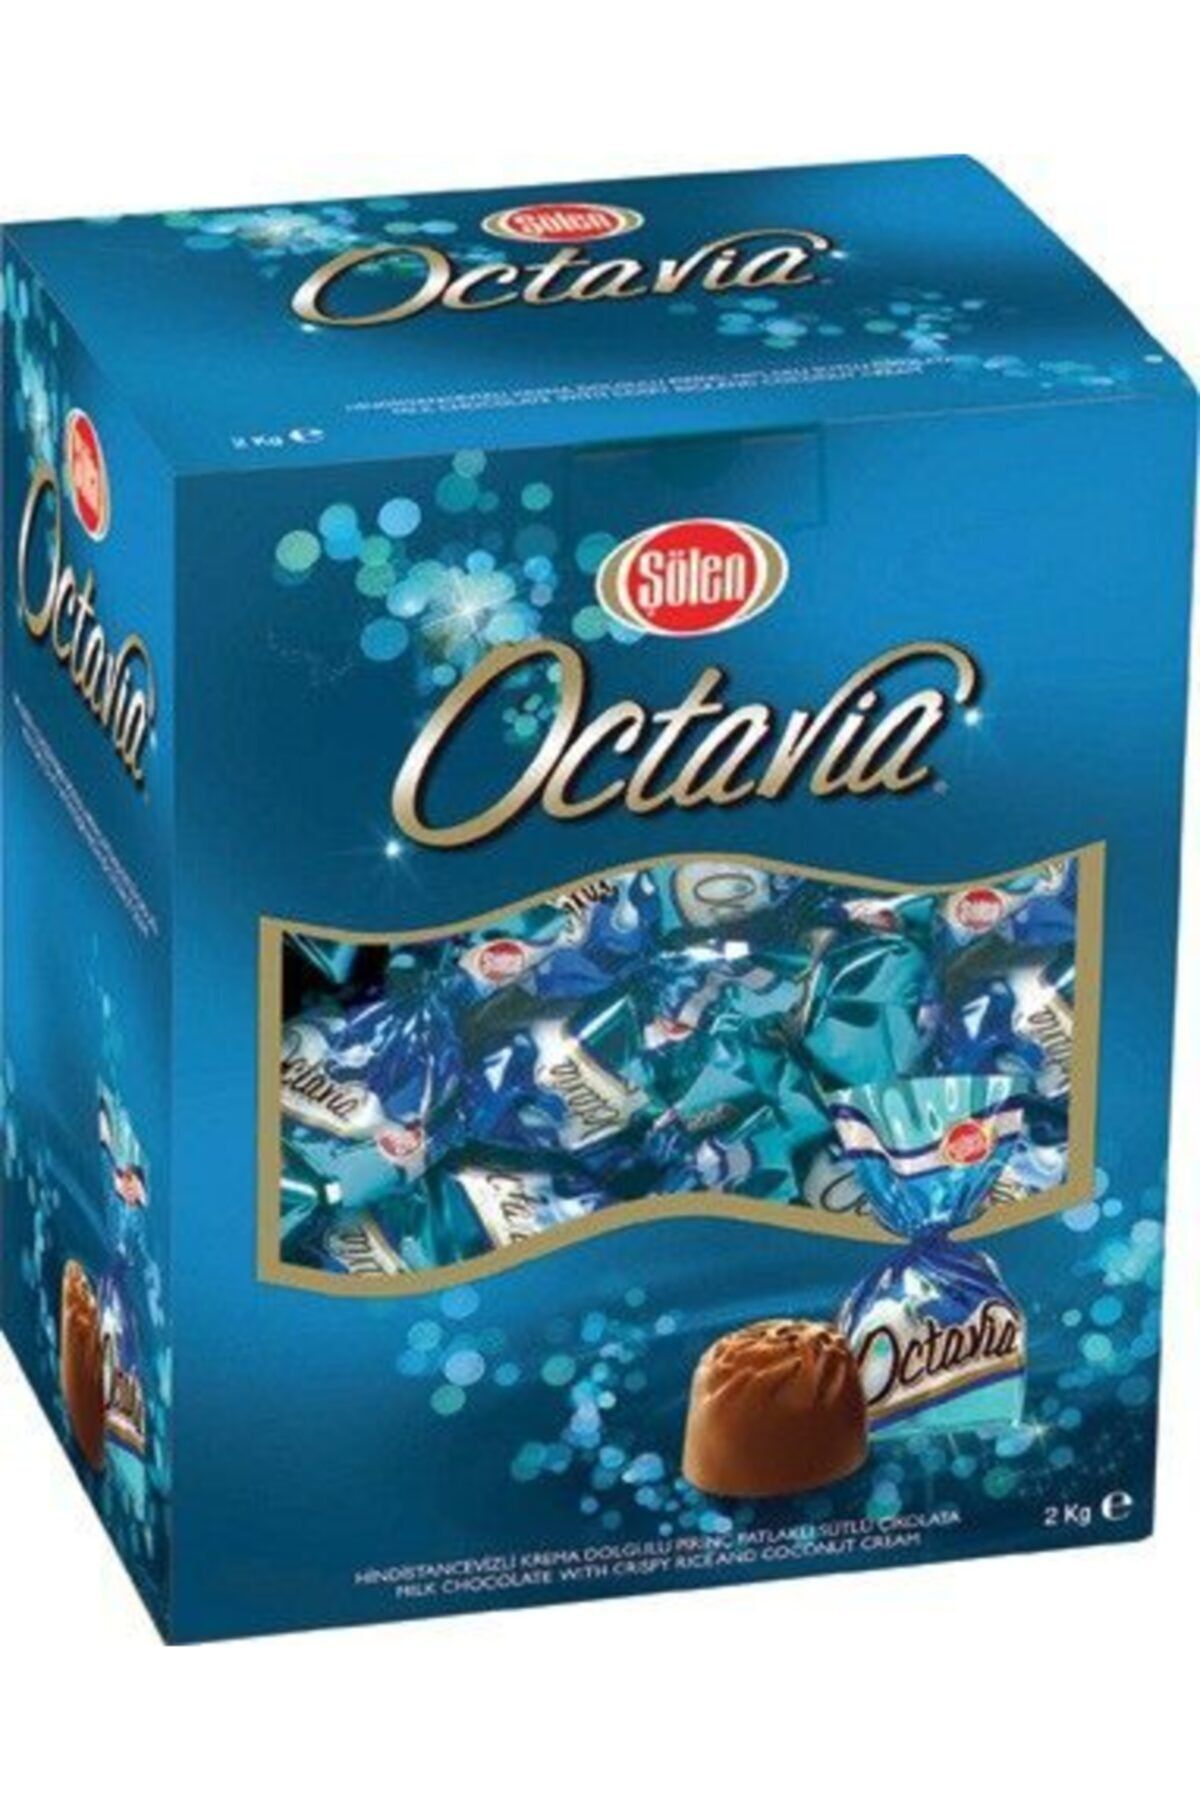 Şölen Octavia Dolgulu Çikolata Hindistan Cevizli 2 kg